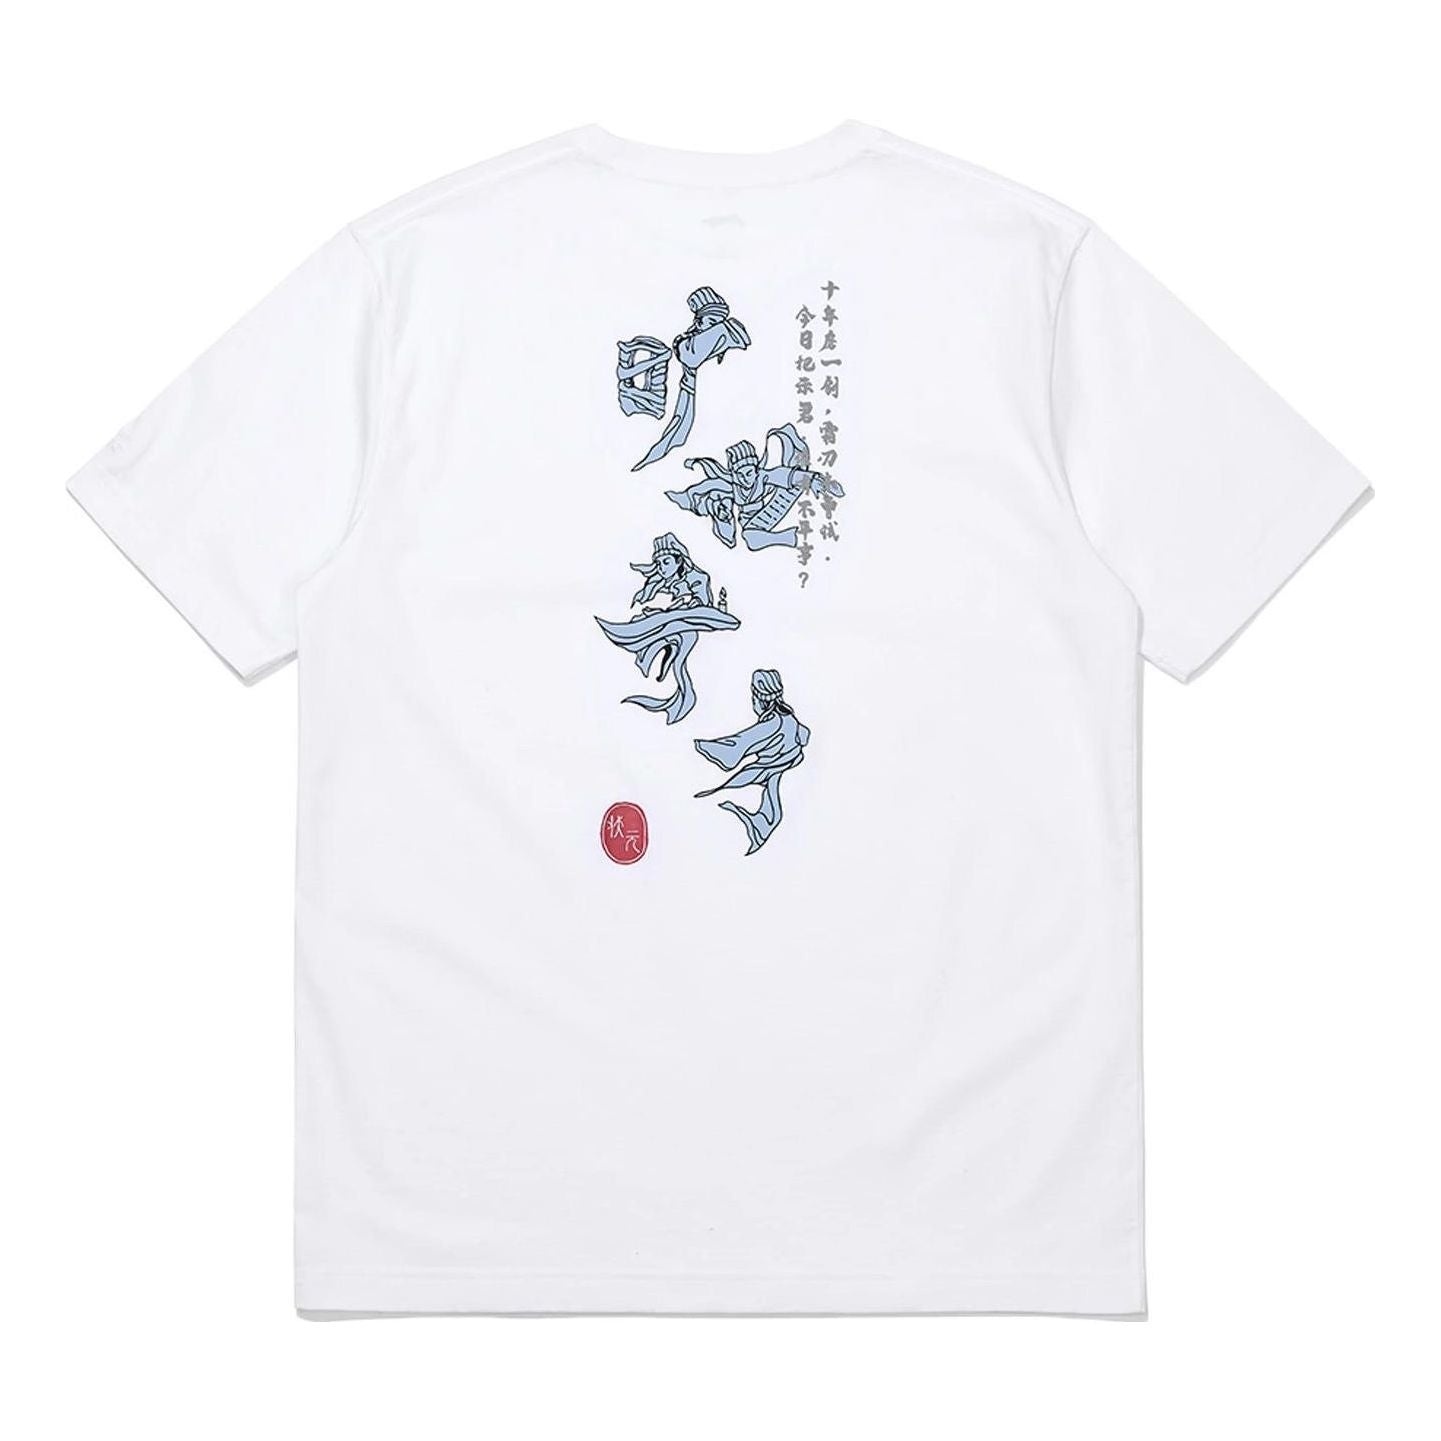 Li-Ning Graphic Printed T-Shirt 'White Blue' AHSS371-1 - 2